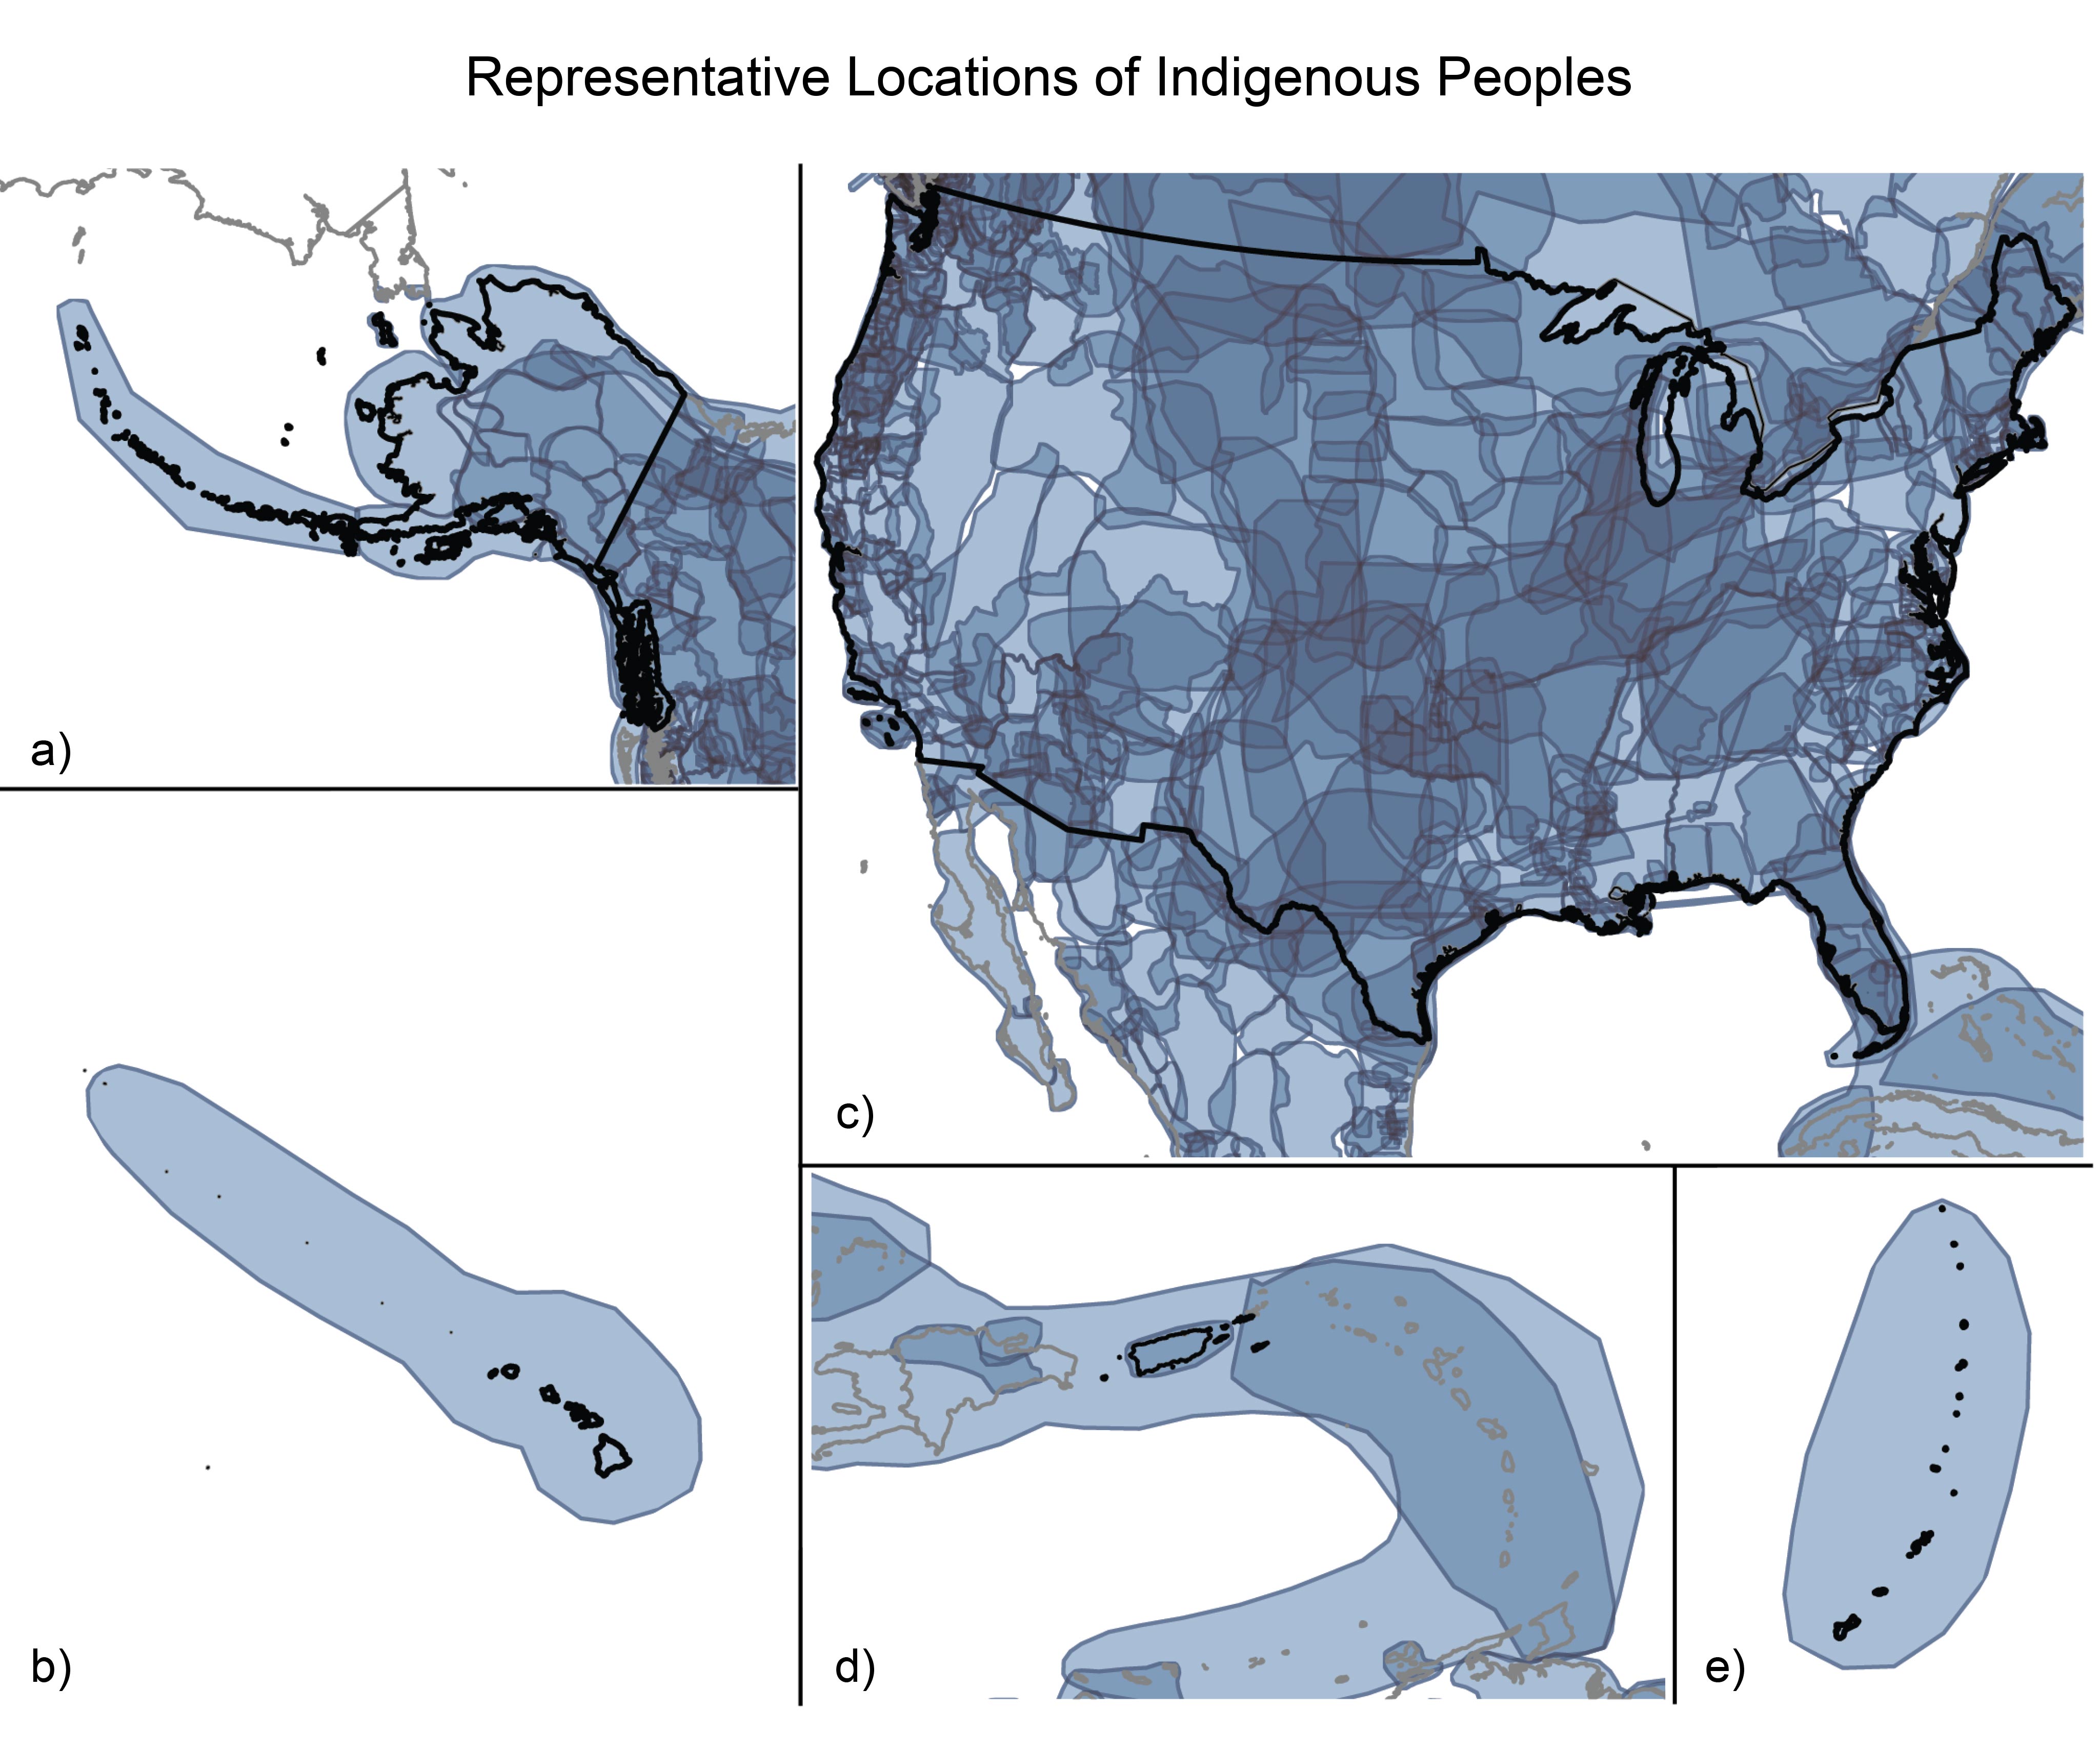 Representative Locations of Indigenous Peoples